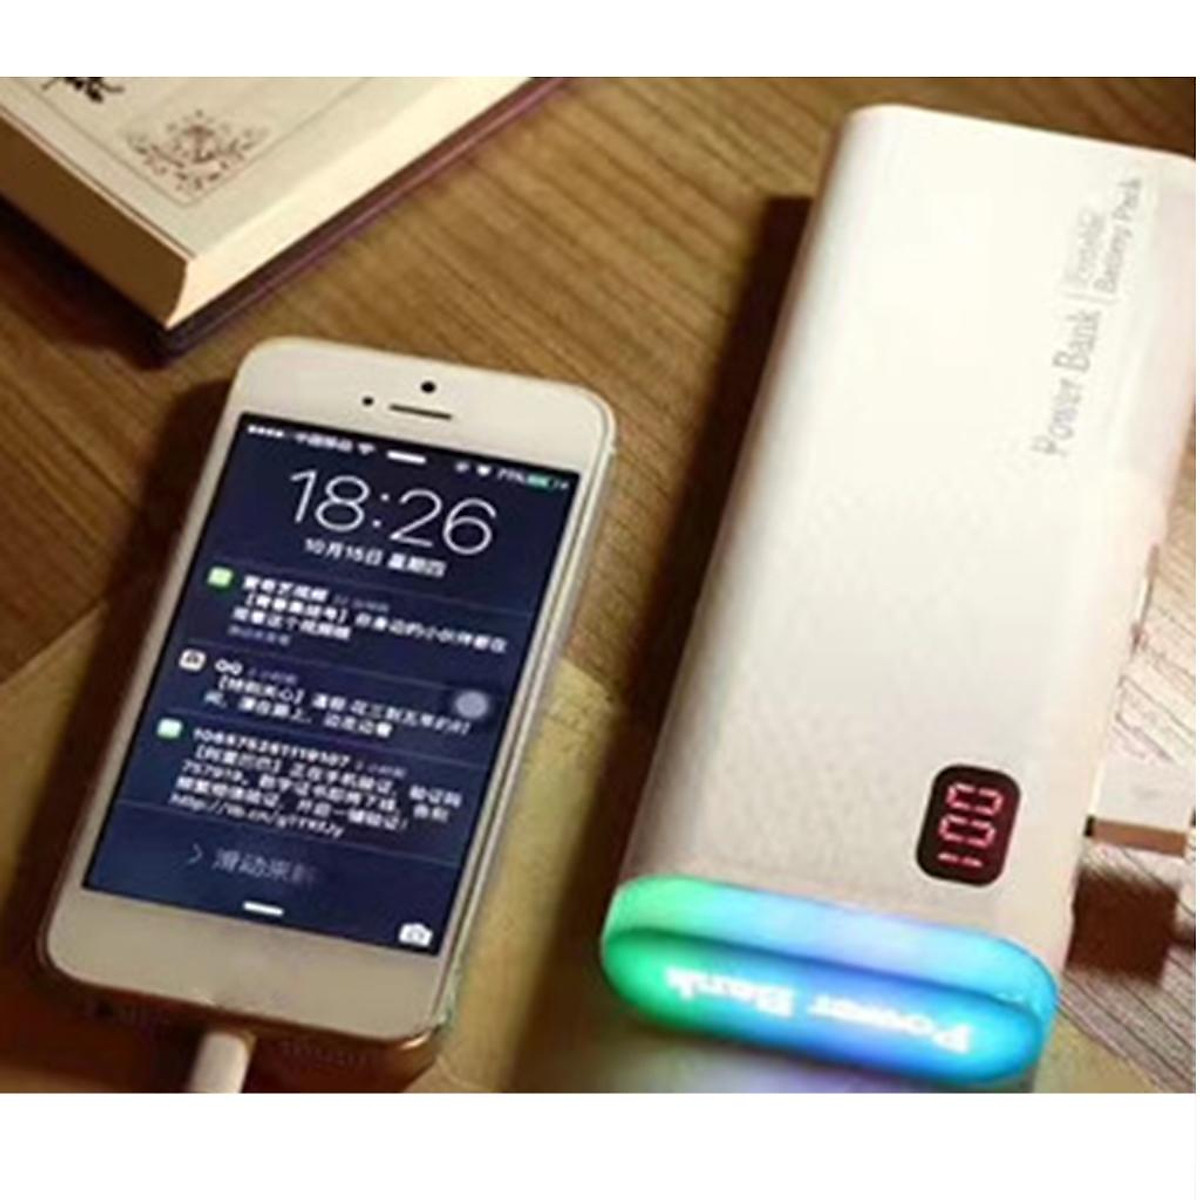 Mini USB Power Bank Case 4x18650 Silver DIY Charger Kit